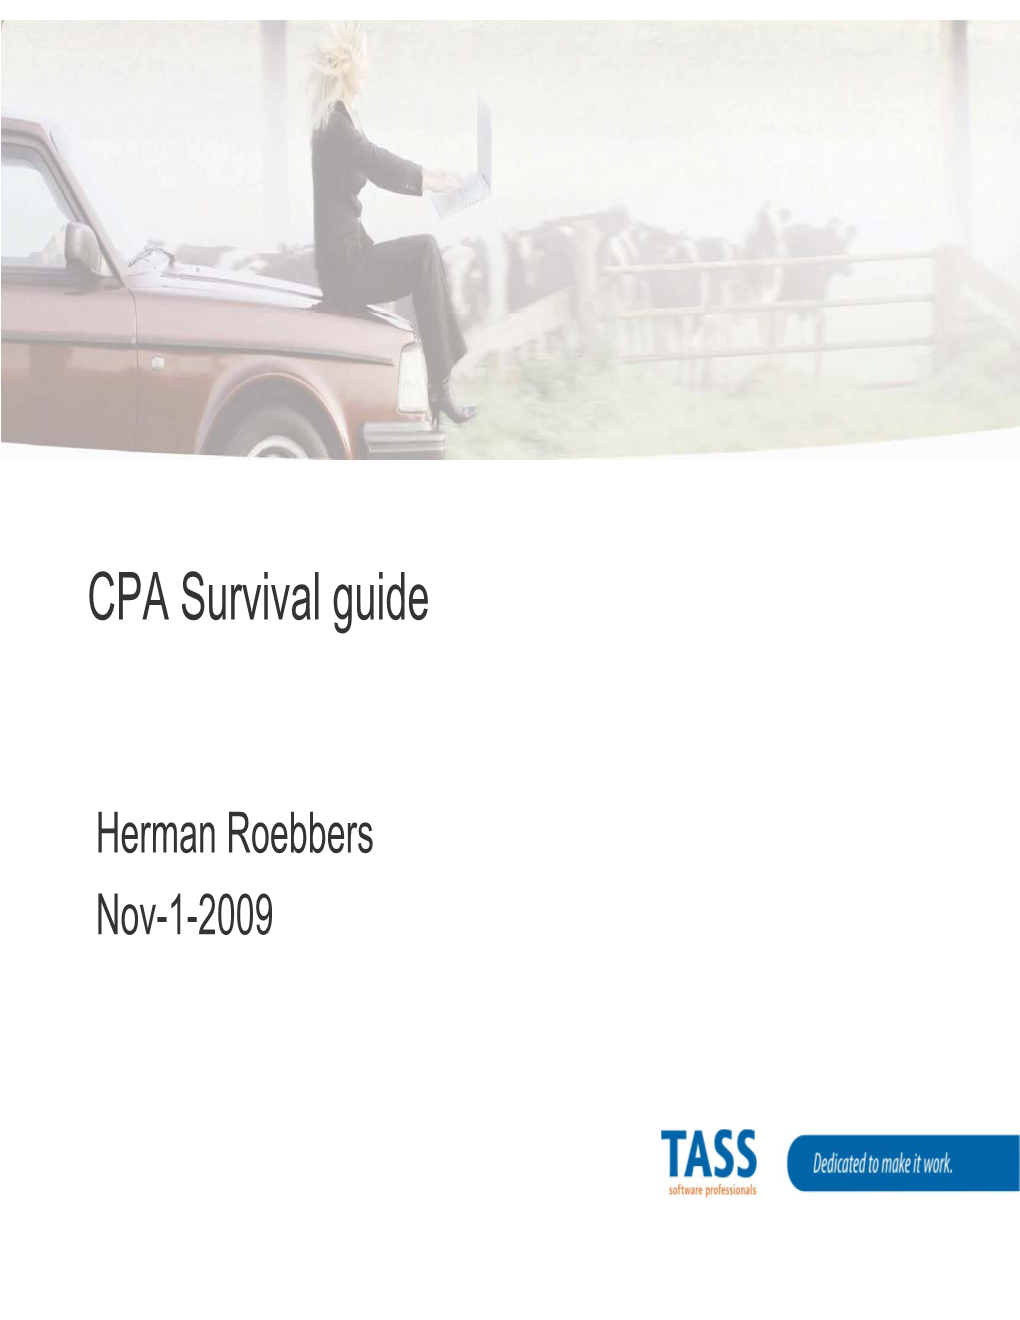 CPA Survival Guide